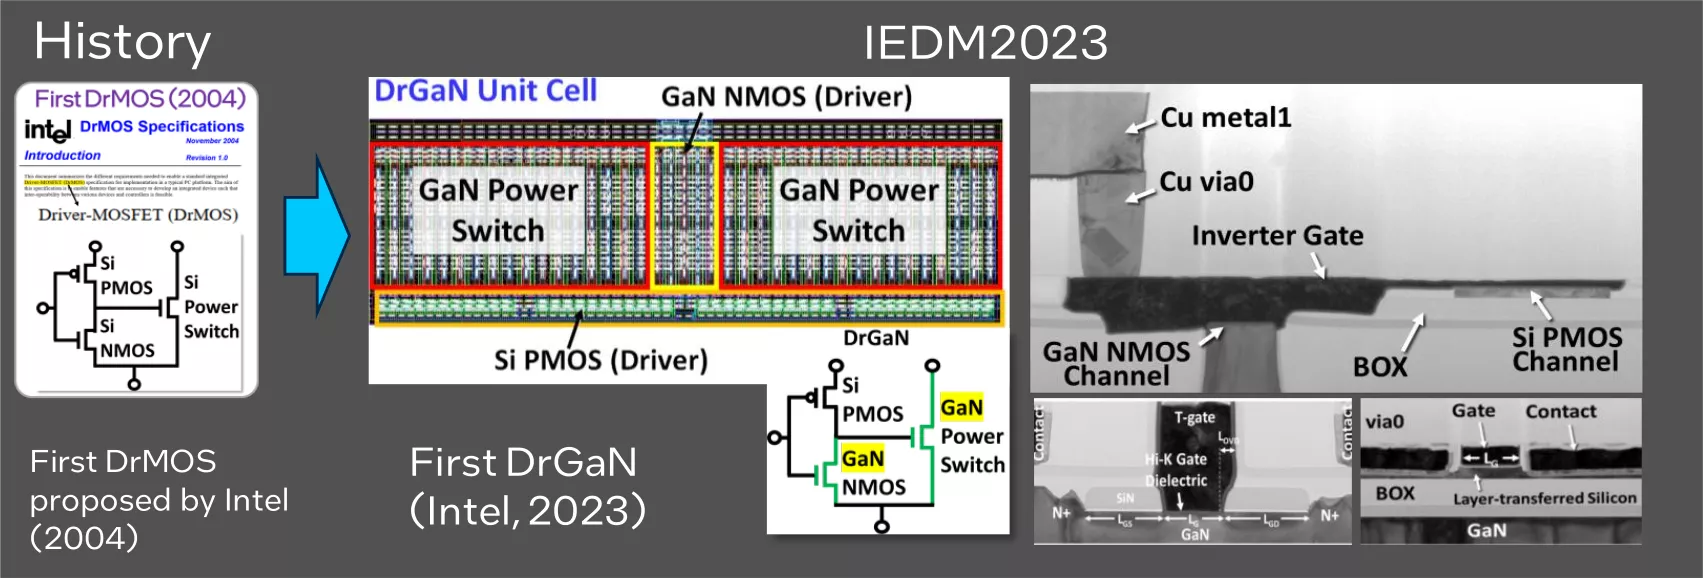 Intel Iedm2023 Gan